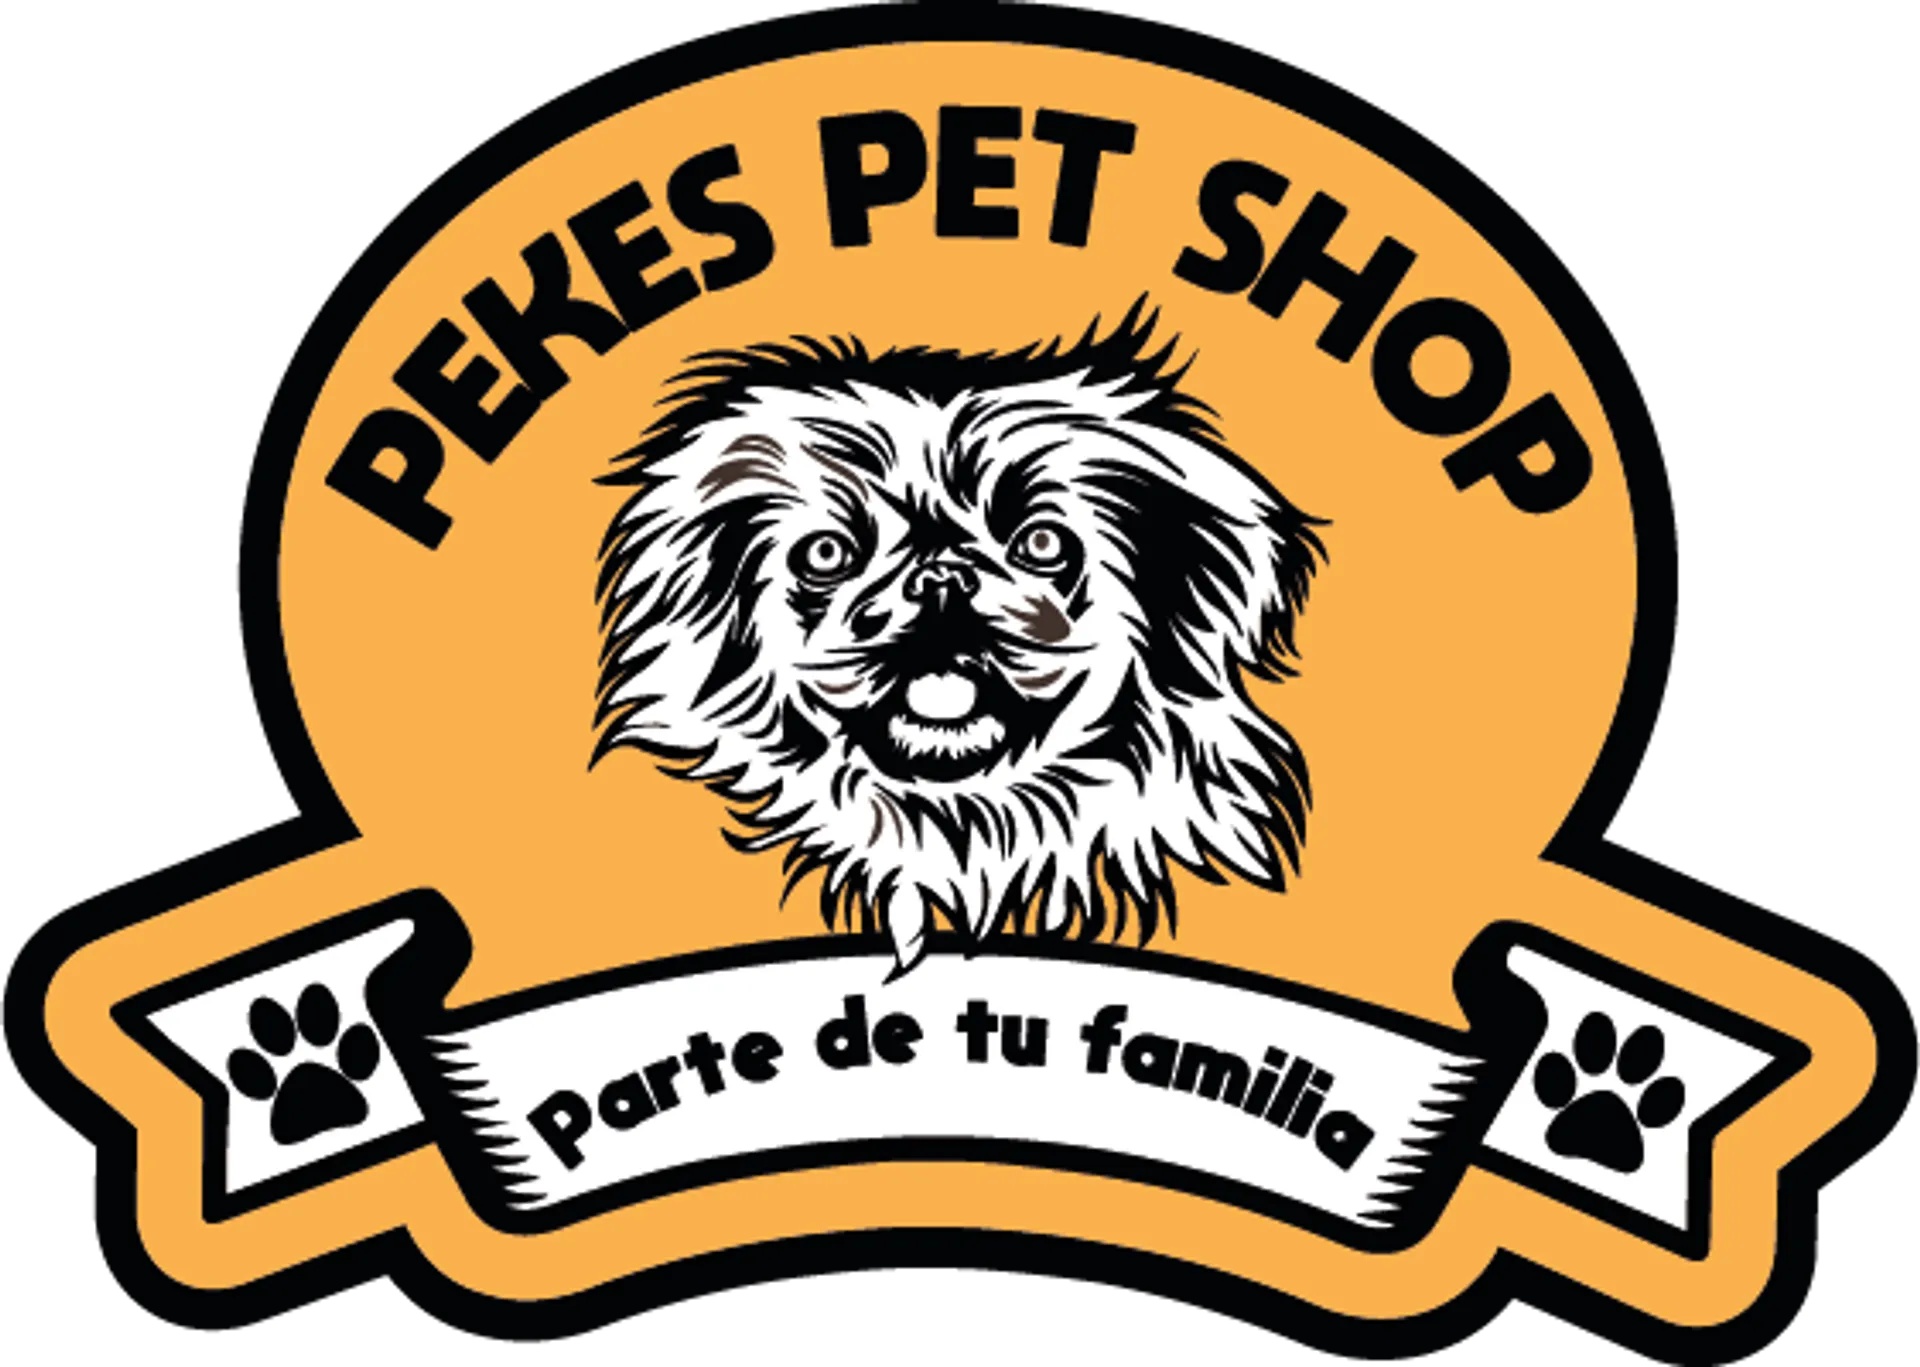 PEKES PET SHOP logo